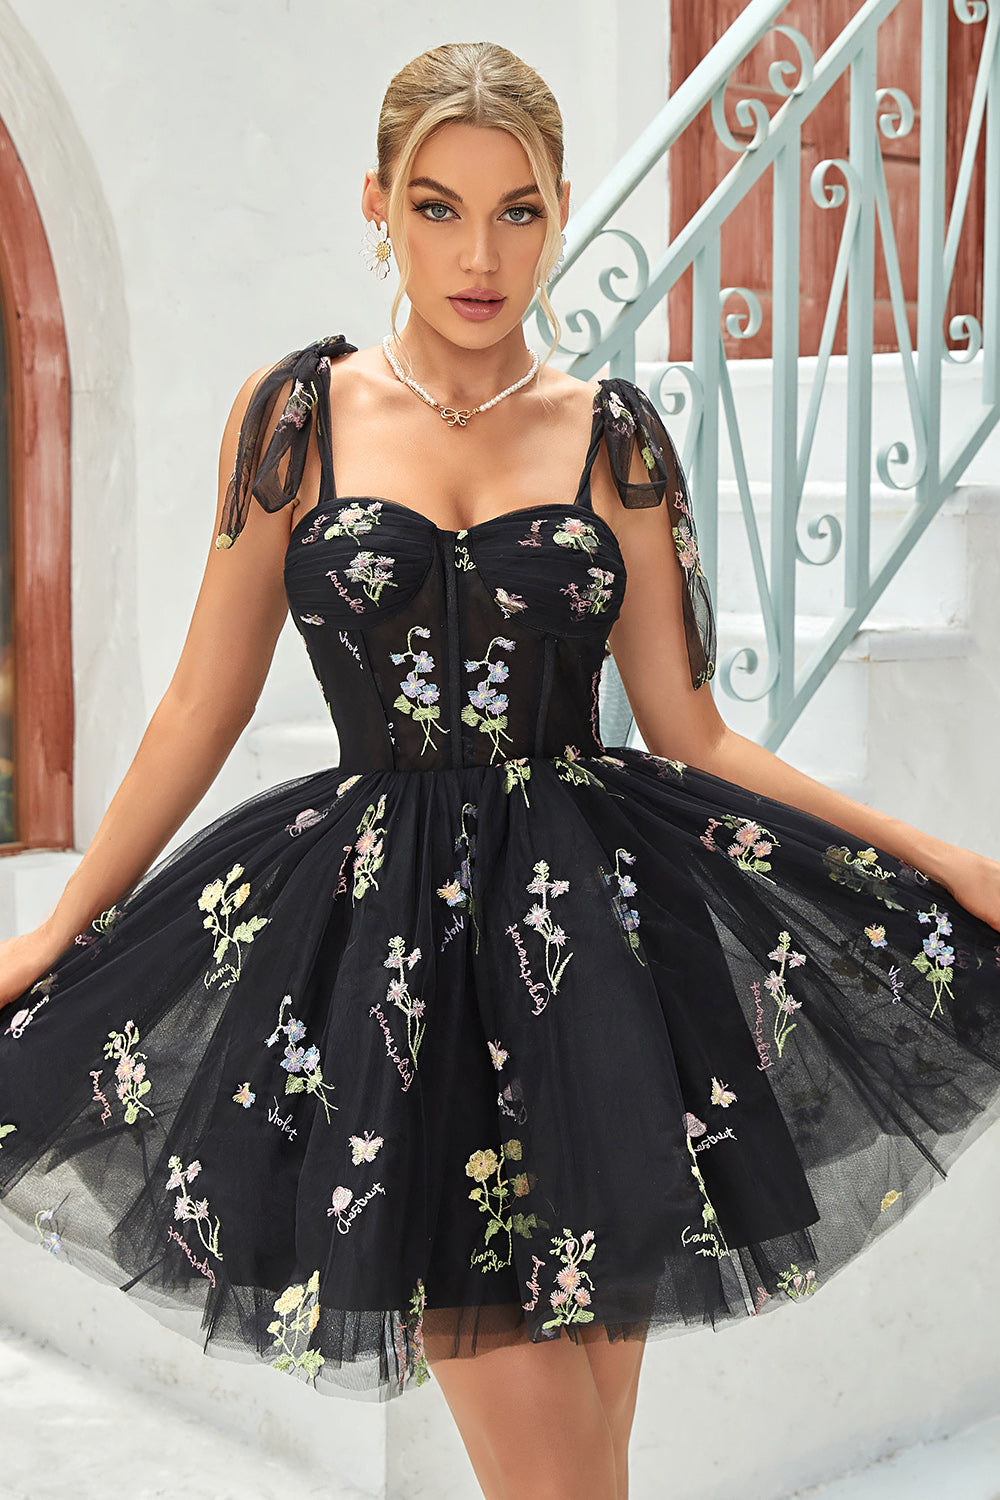 ZAPAKA noir paillettes robe de Cocktail fourreau scintillant bretelles  spaghetti robe des années 20 avec papillon – ZAPAKA FR